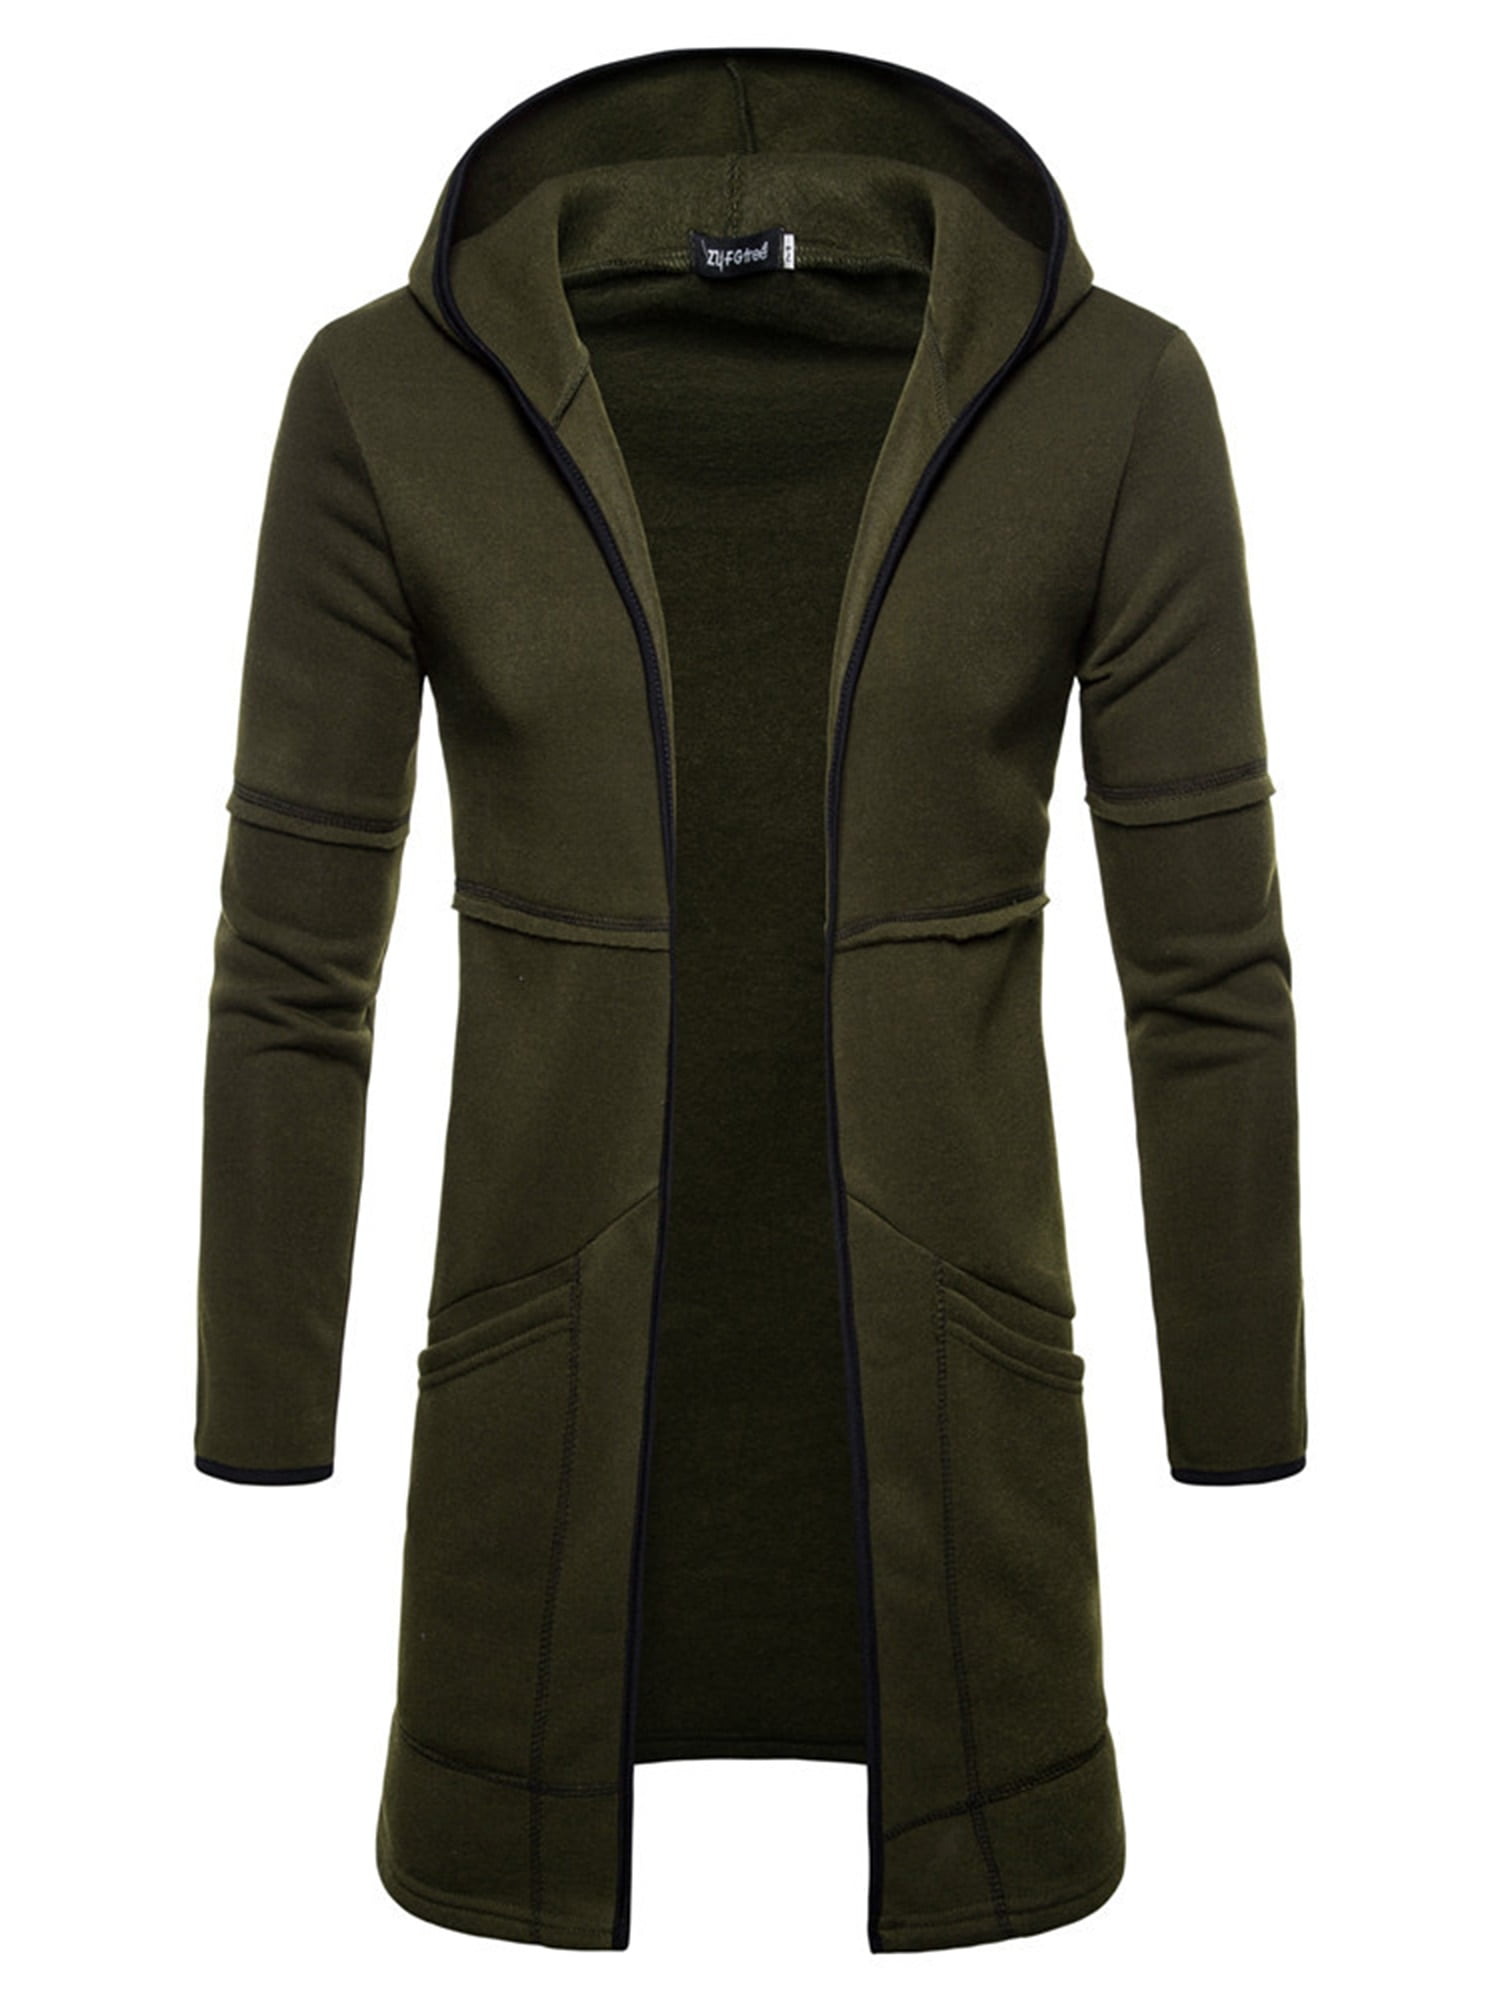 Mens Hoodie Jacket Overcoat Winter Warm Hooded Zip Trench Coat Casual Outwear